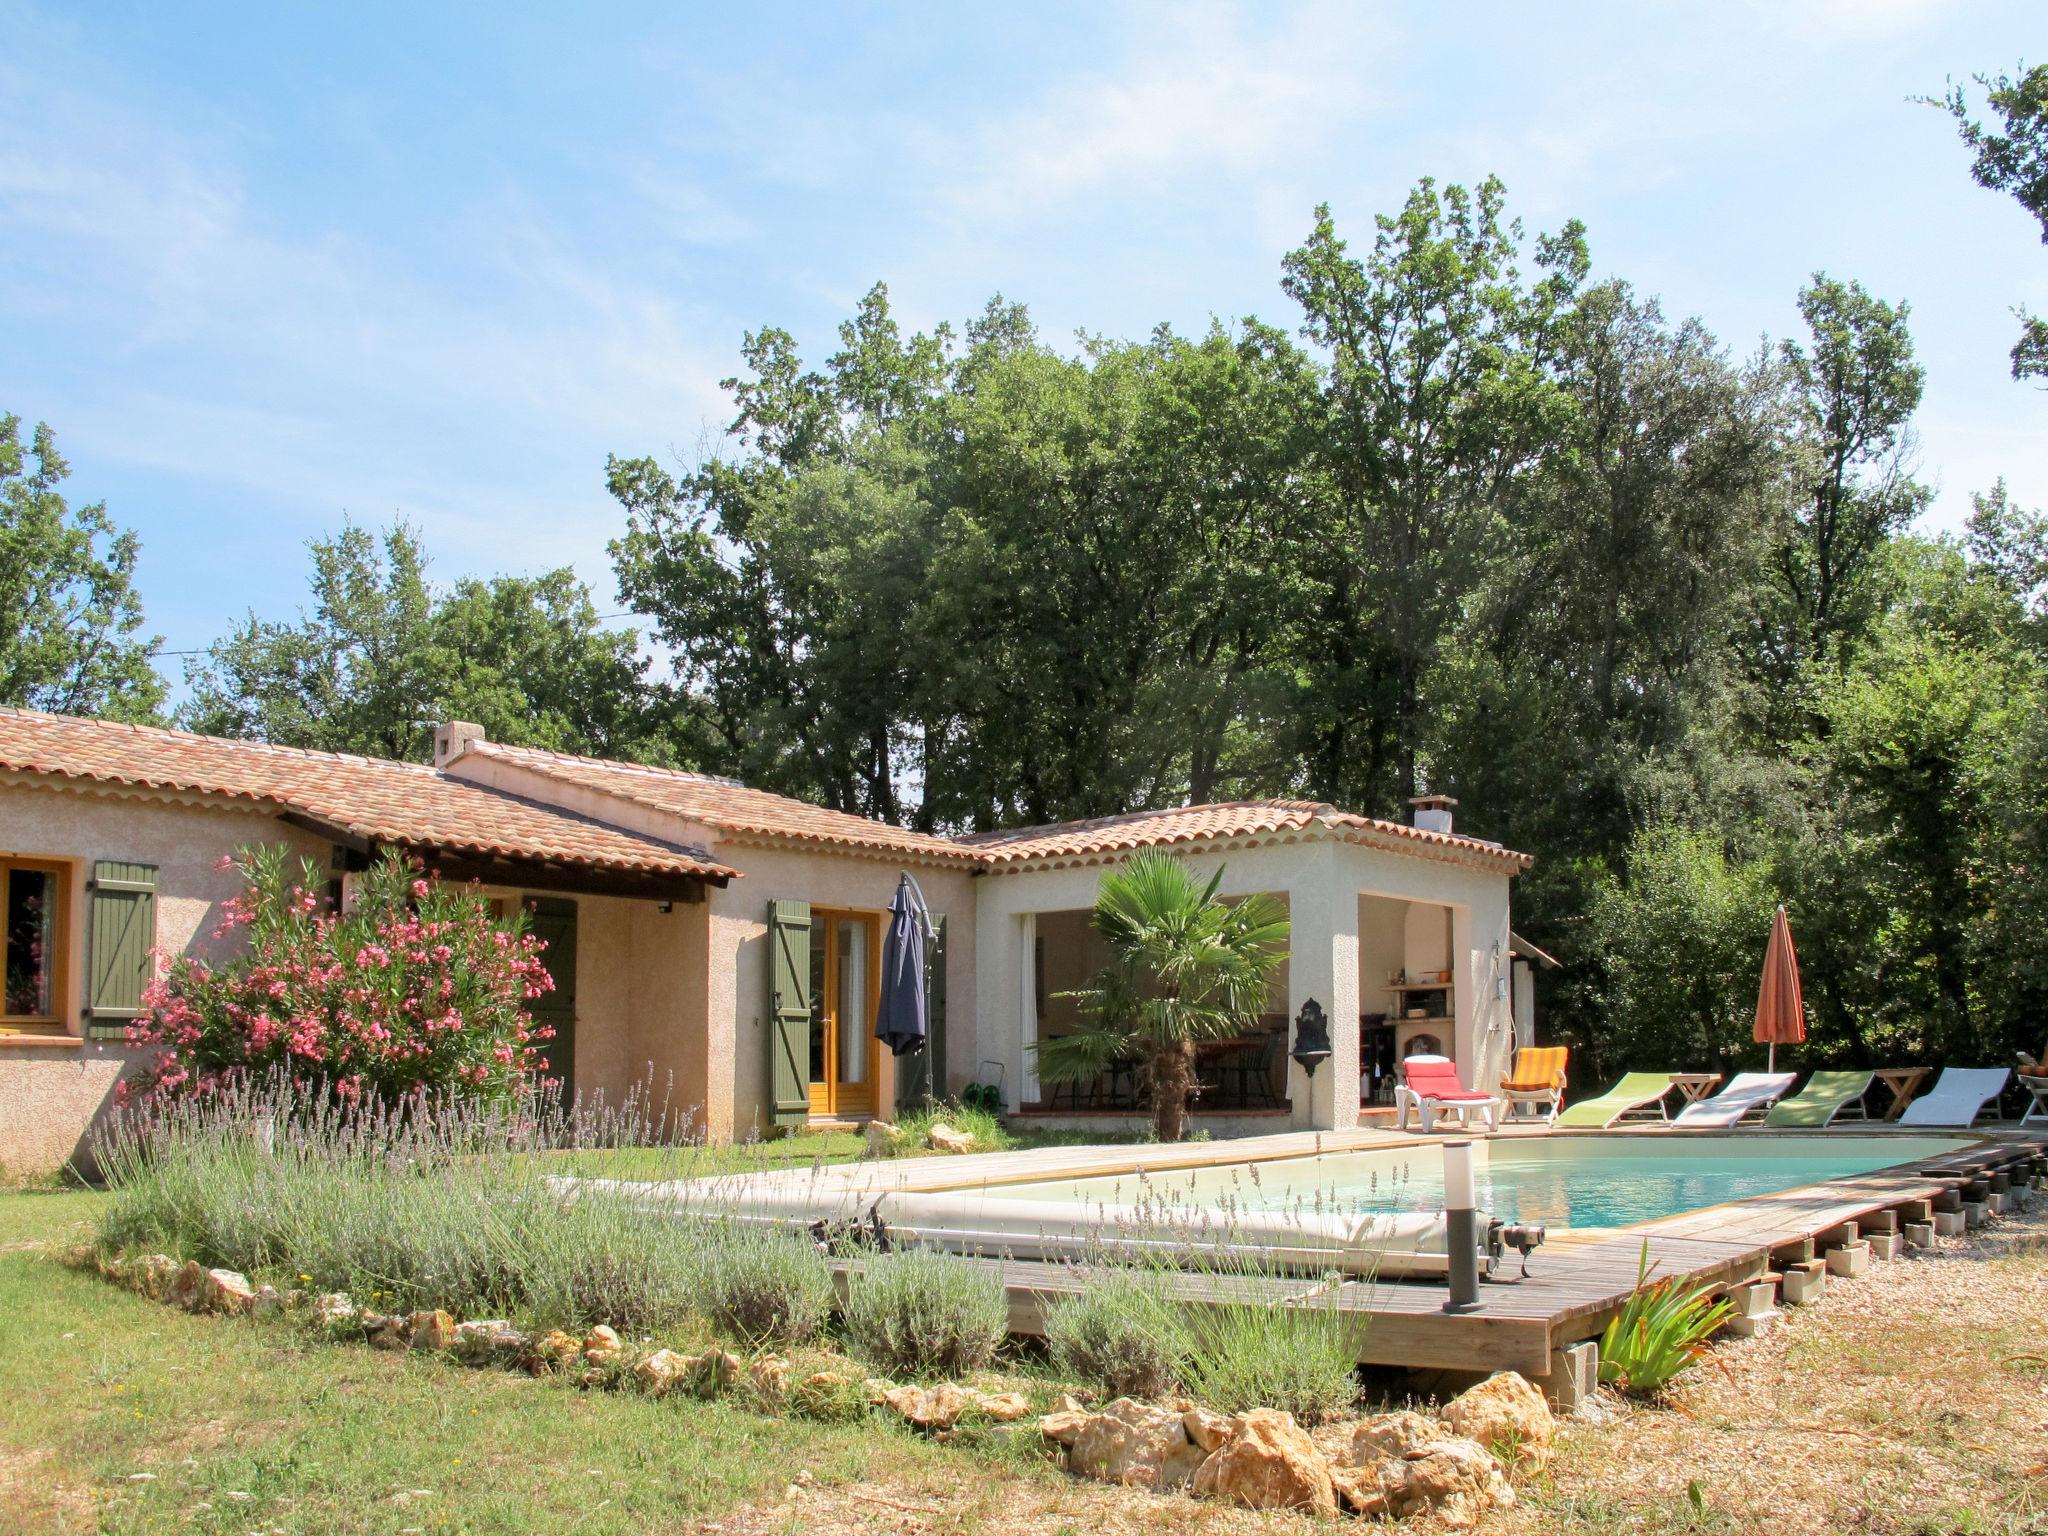 Foto 1 - Casa con 4 camere da letto a Régusse con piscina privata e giardino